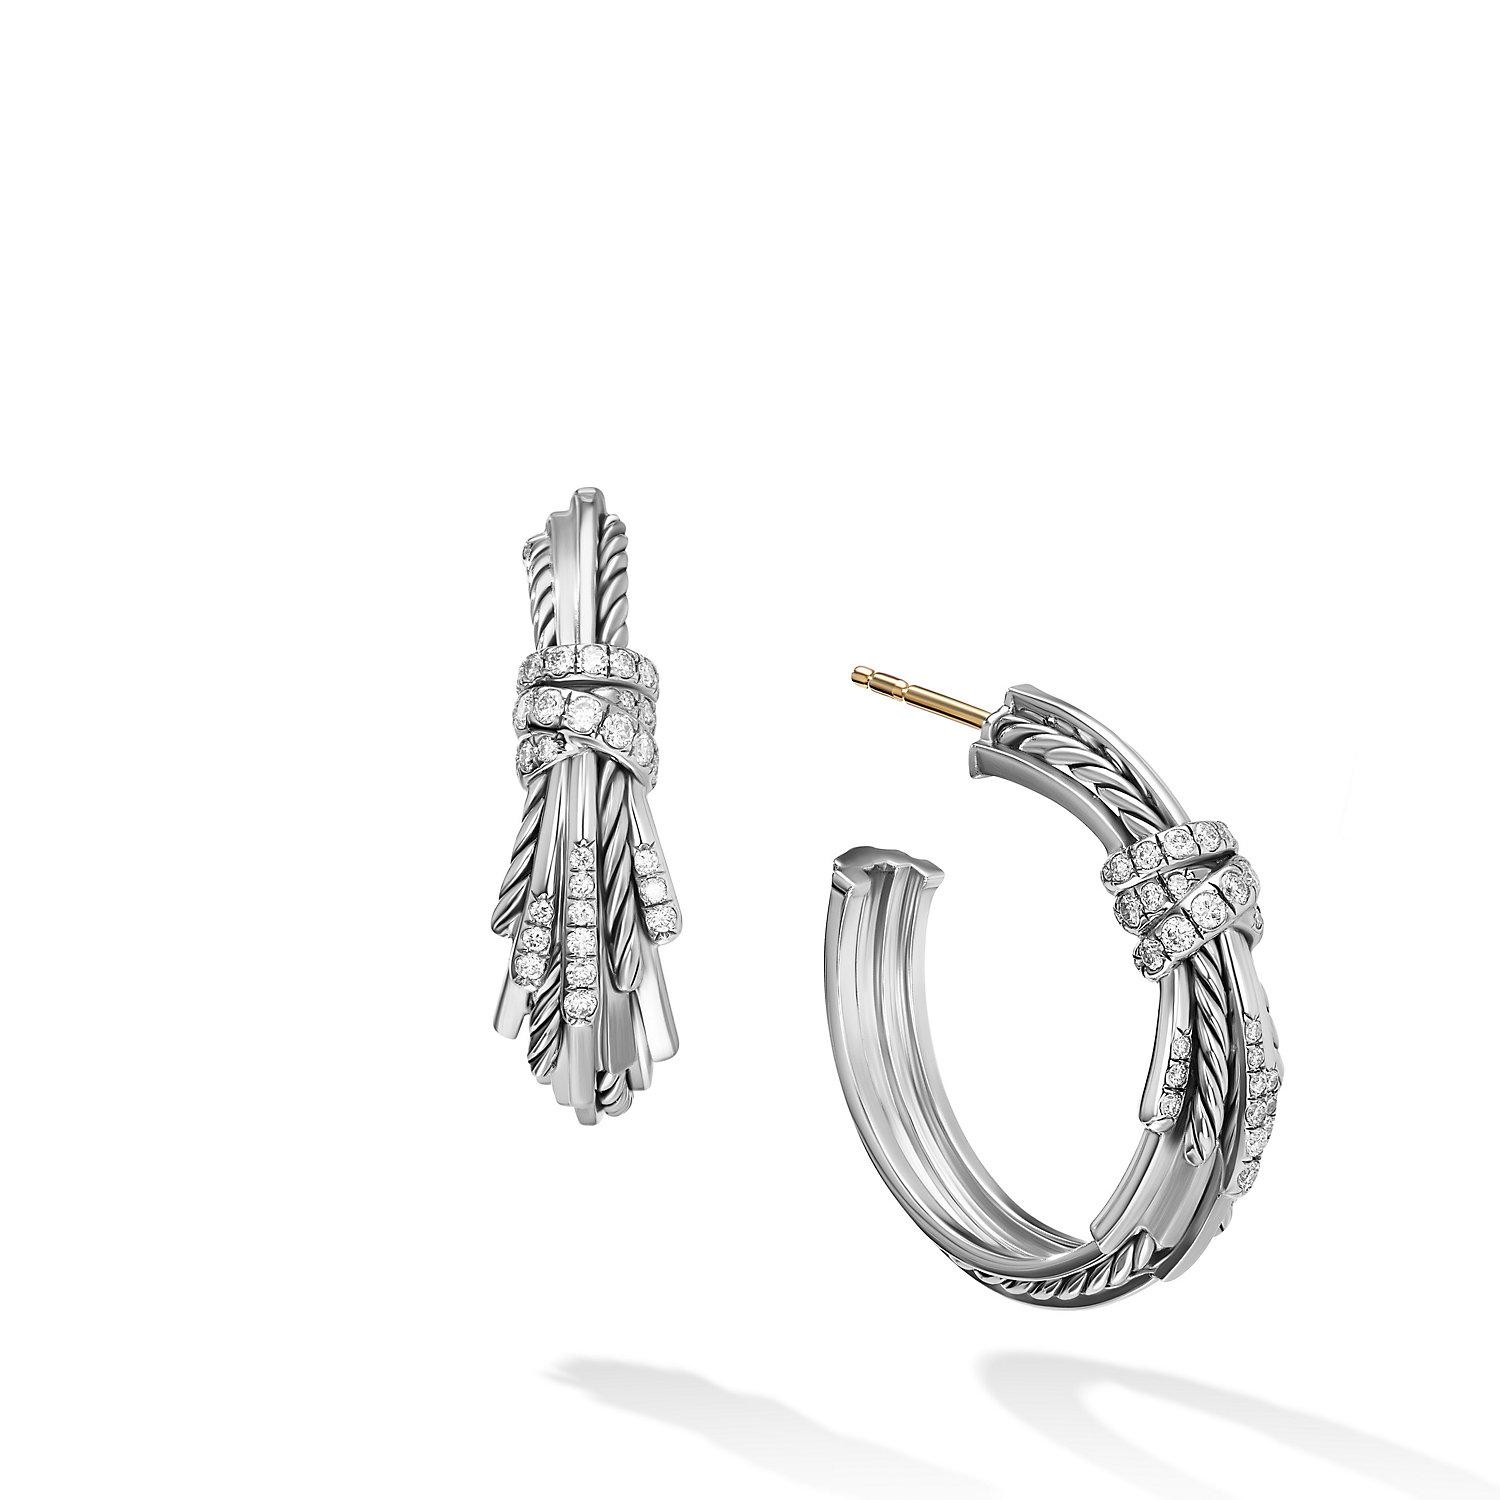 David Yurman Angelika Hoop Earrings in Sterling Silver with Pave Diamonds